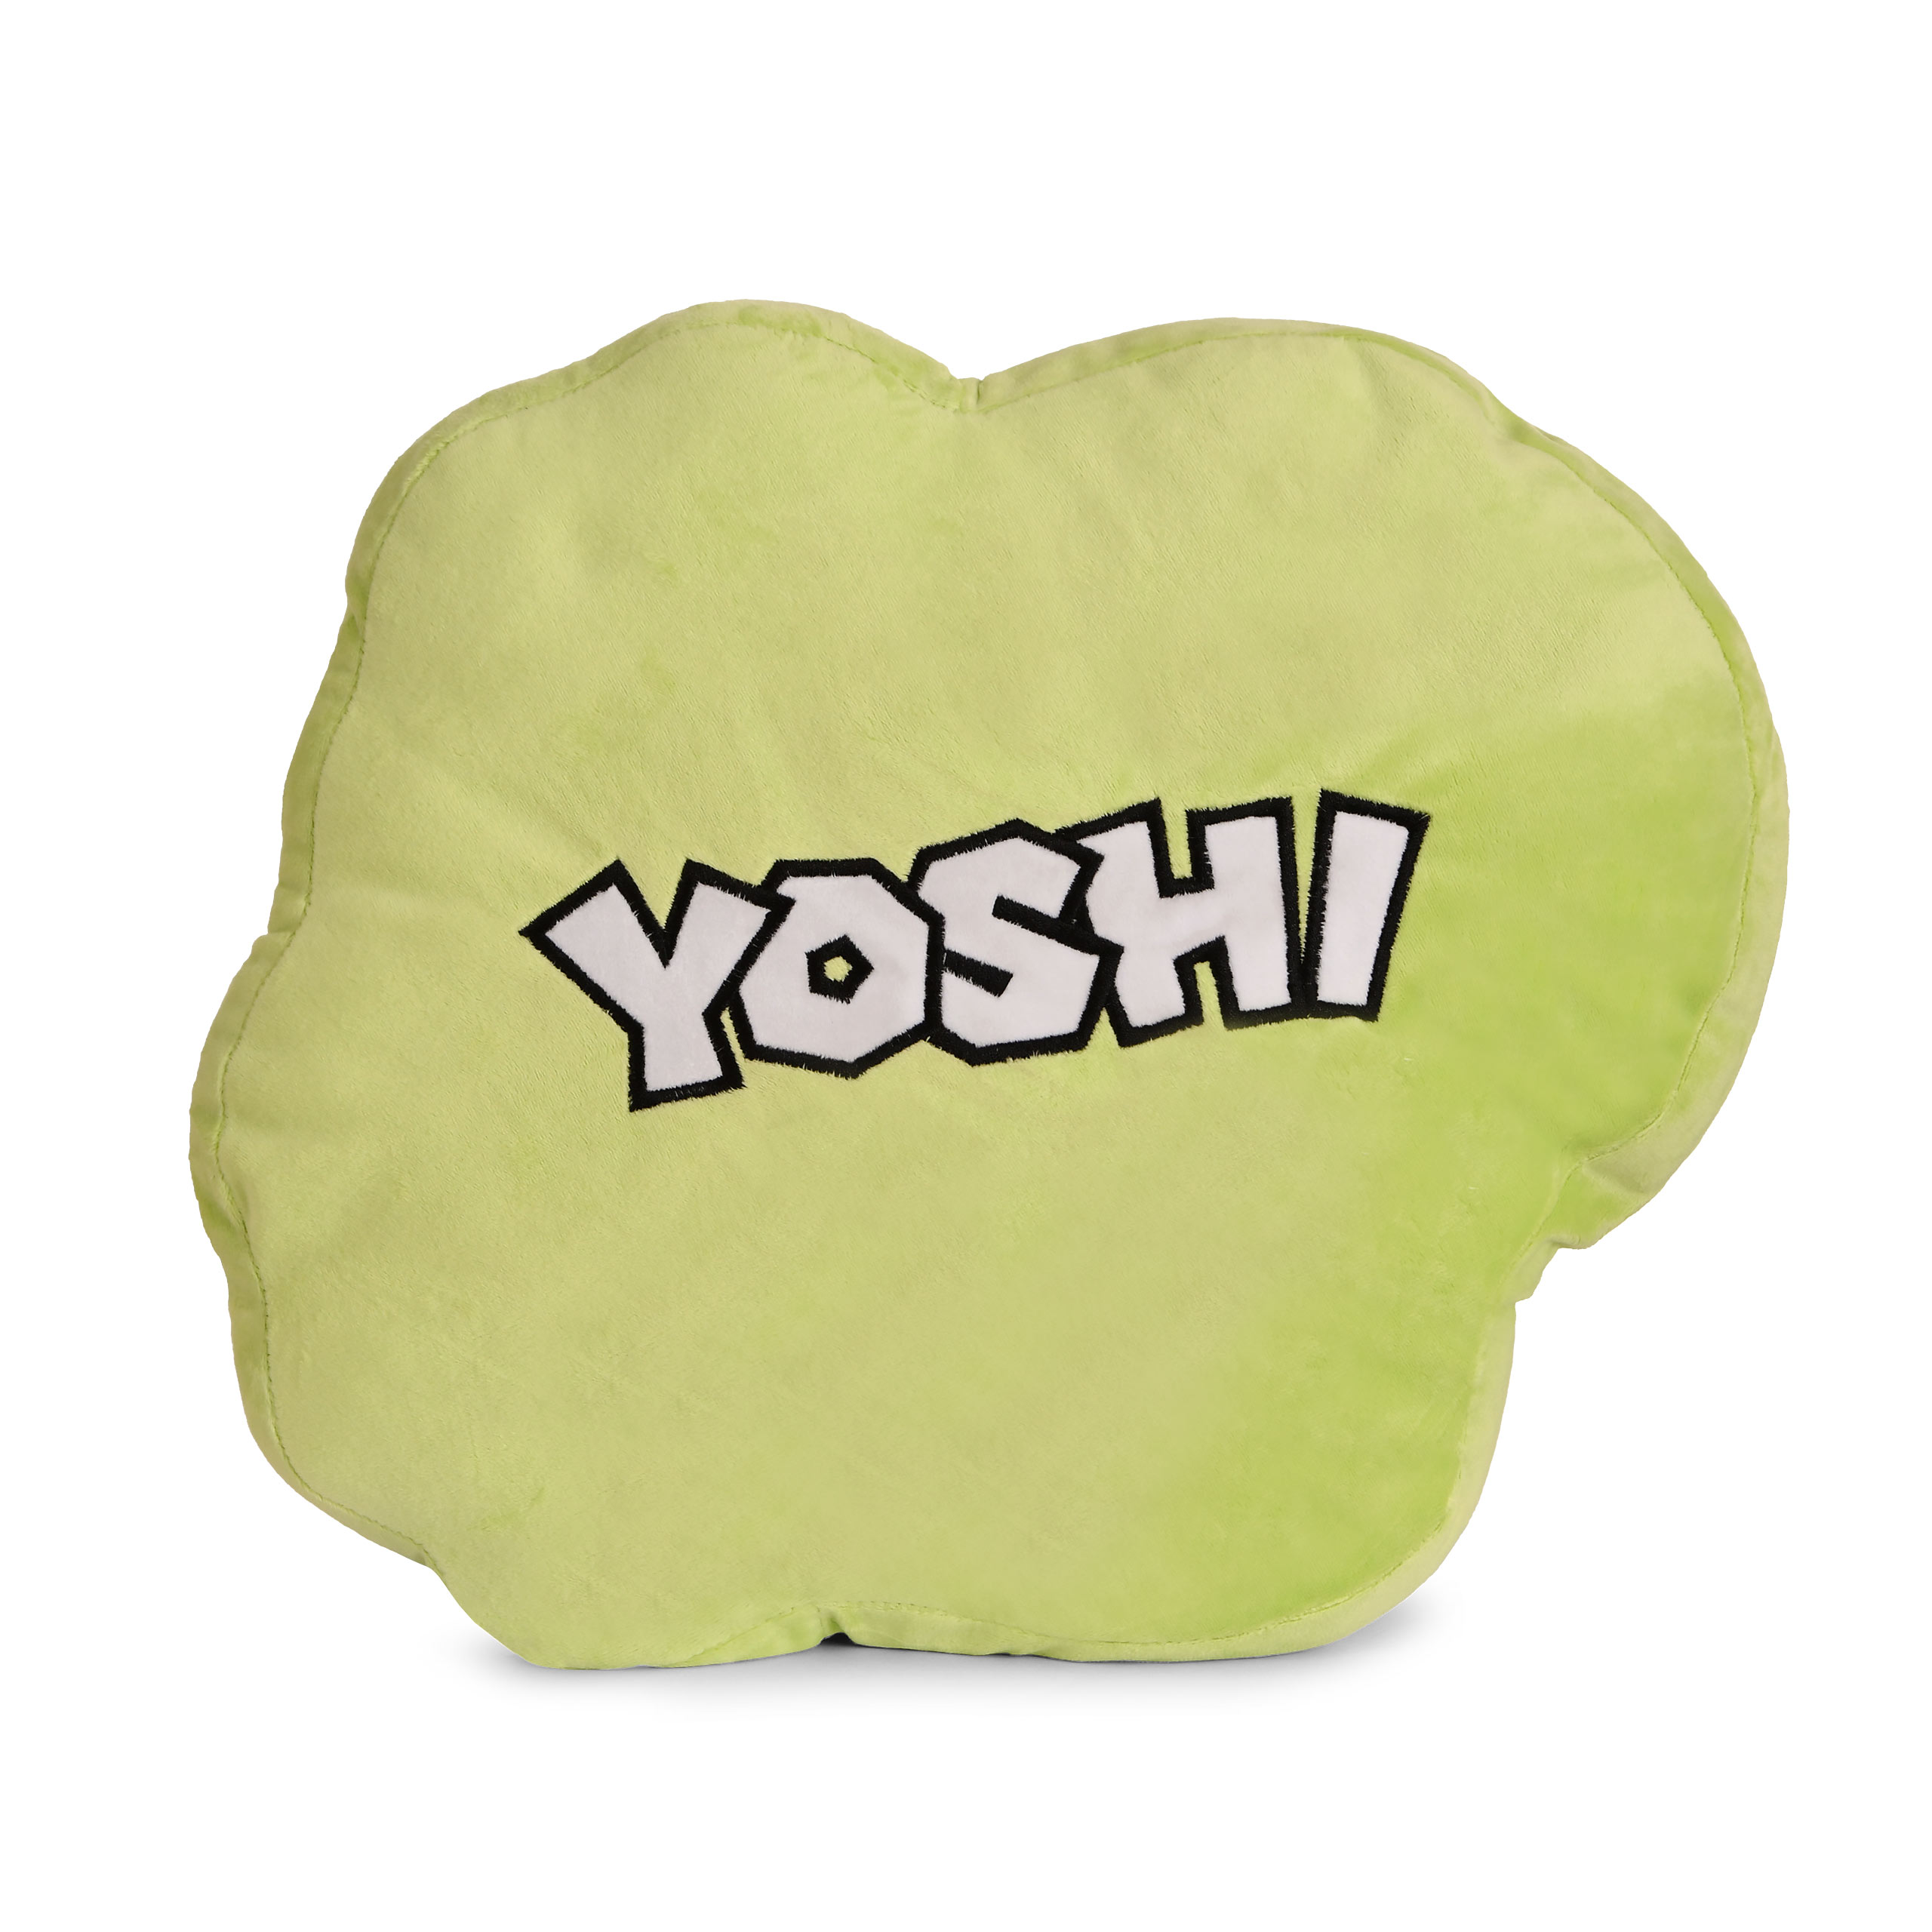 Super Mario - Yoshi Plush Pillow